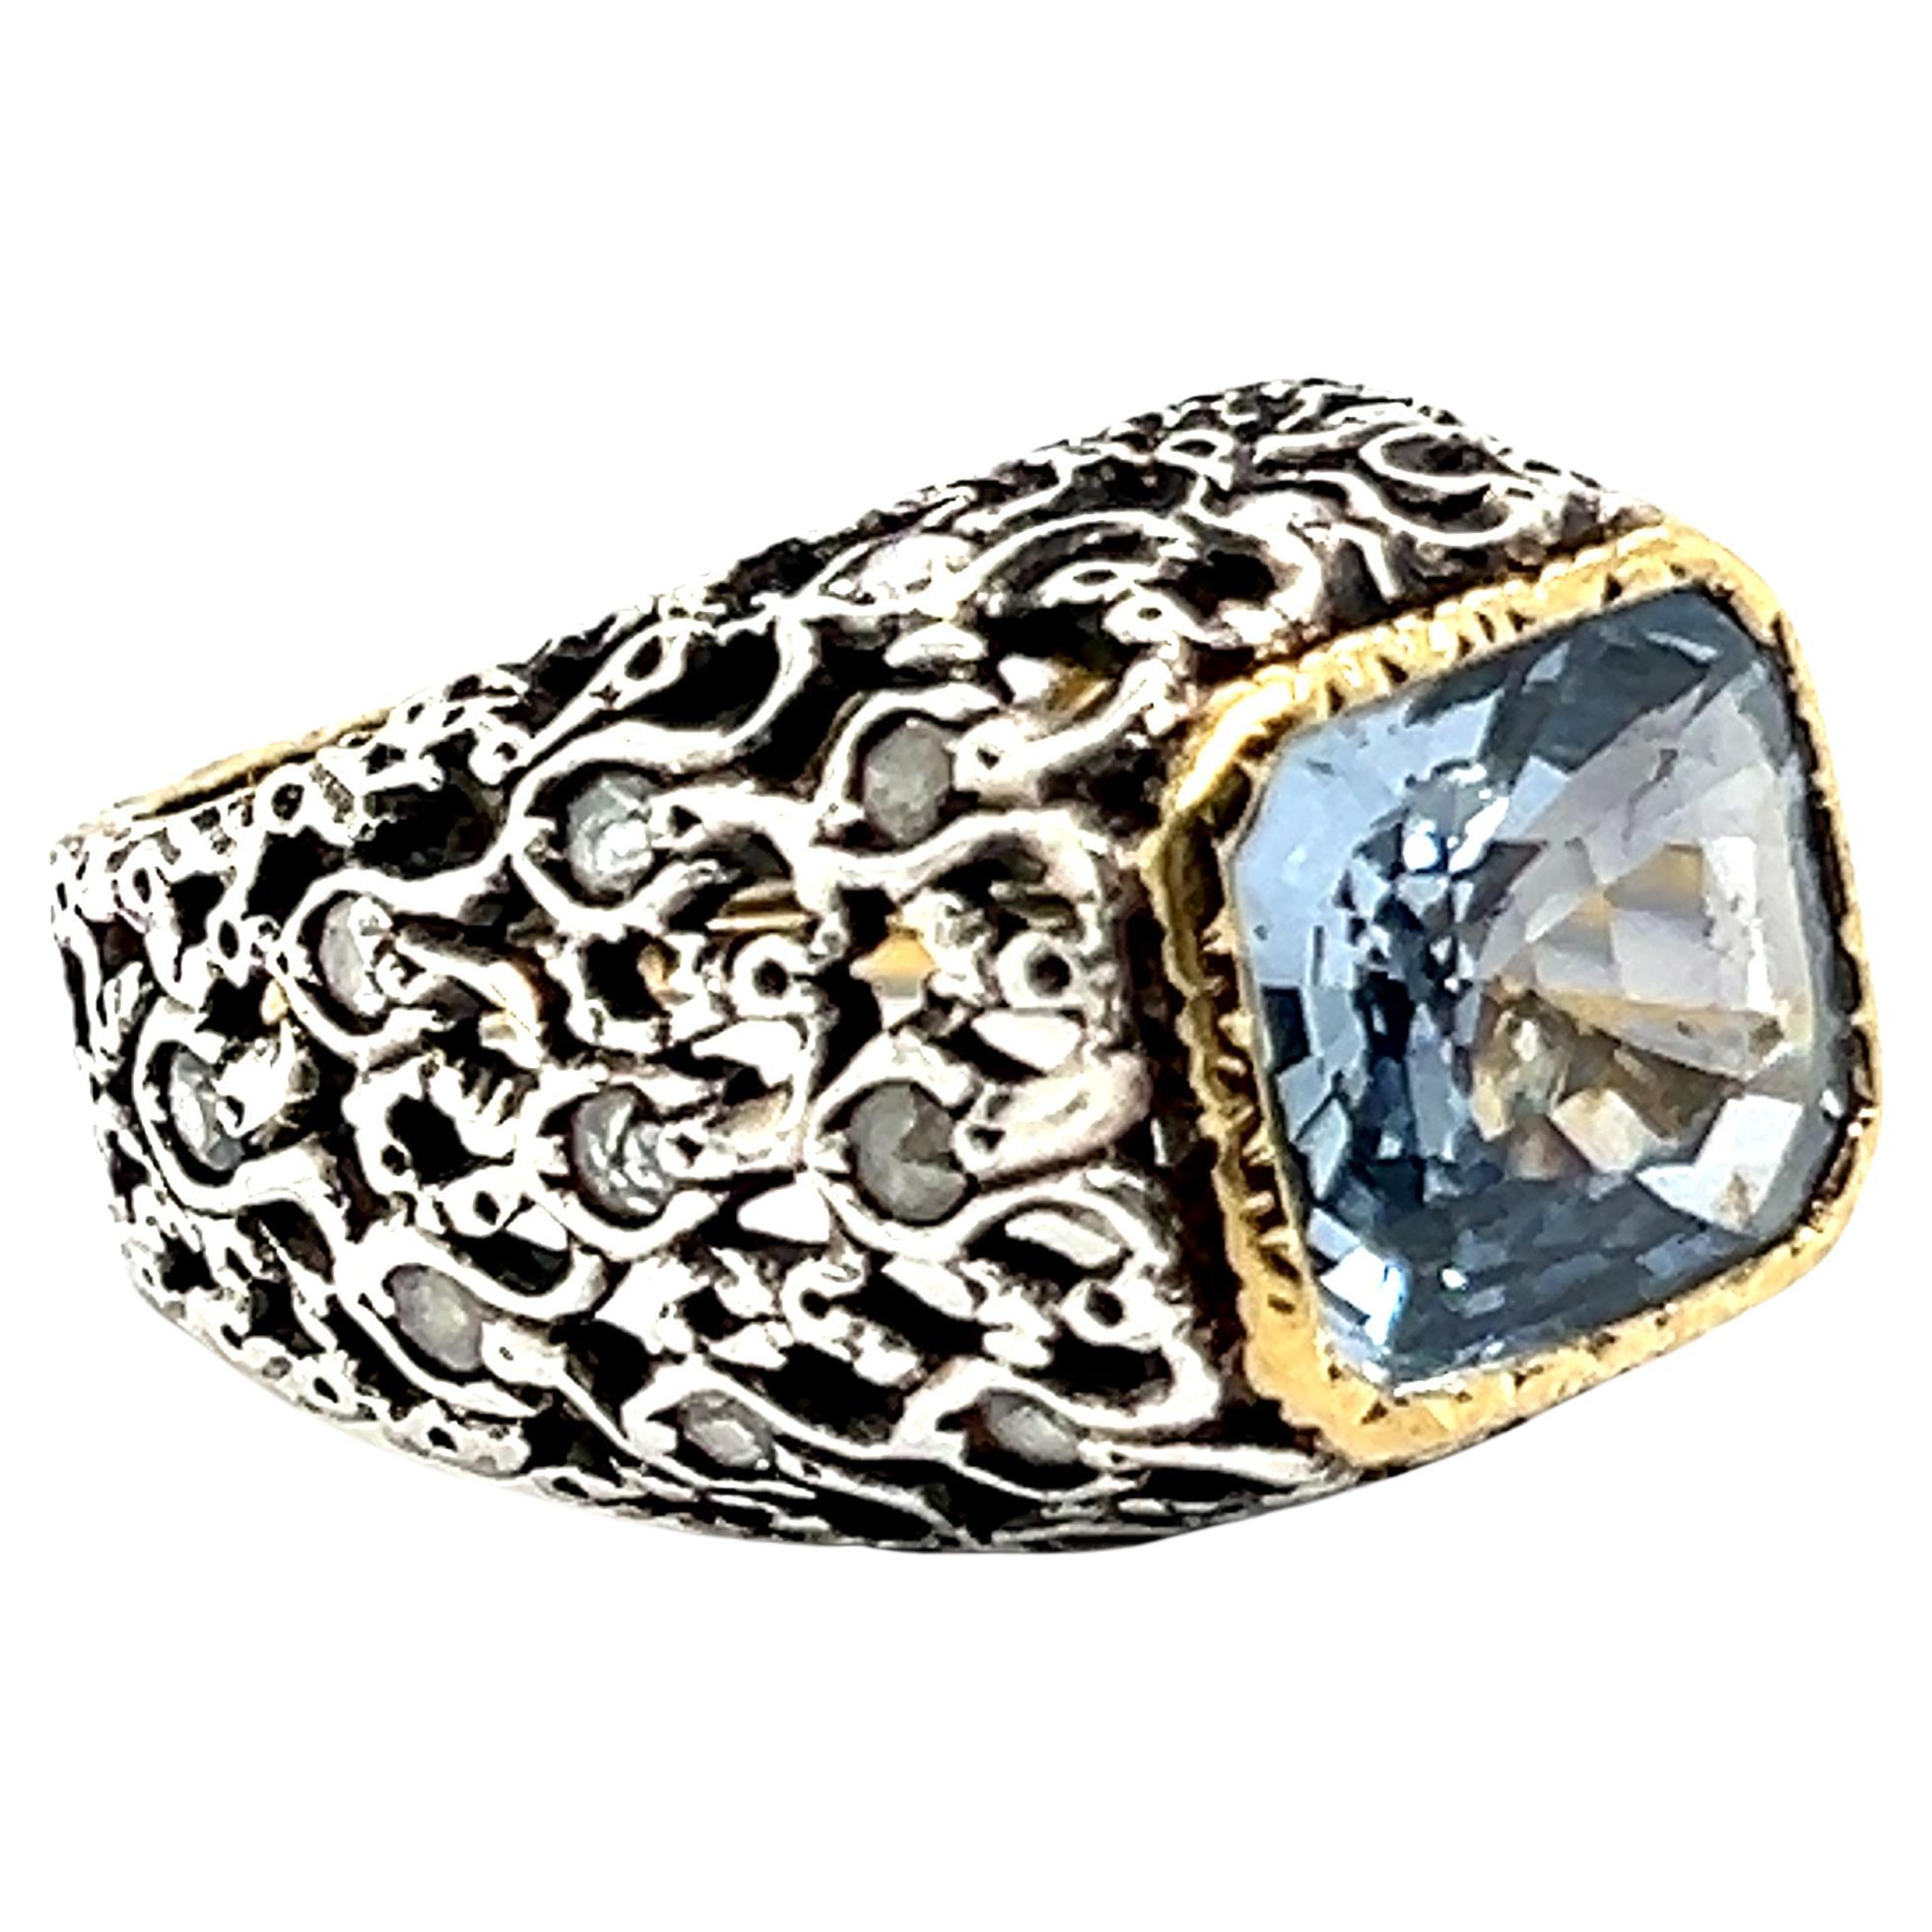 Sapphire and Diamonds Ring in Silver & 18 Karat Yellow Gold by Mario Buccellati